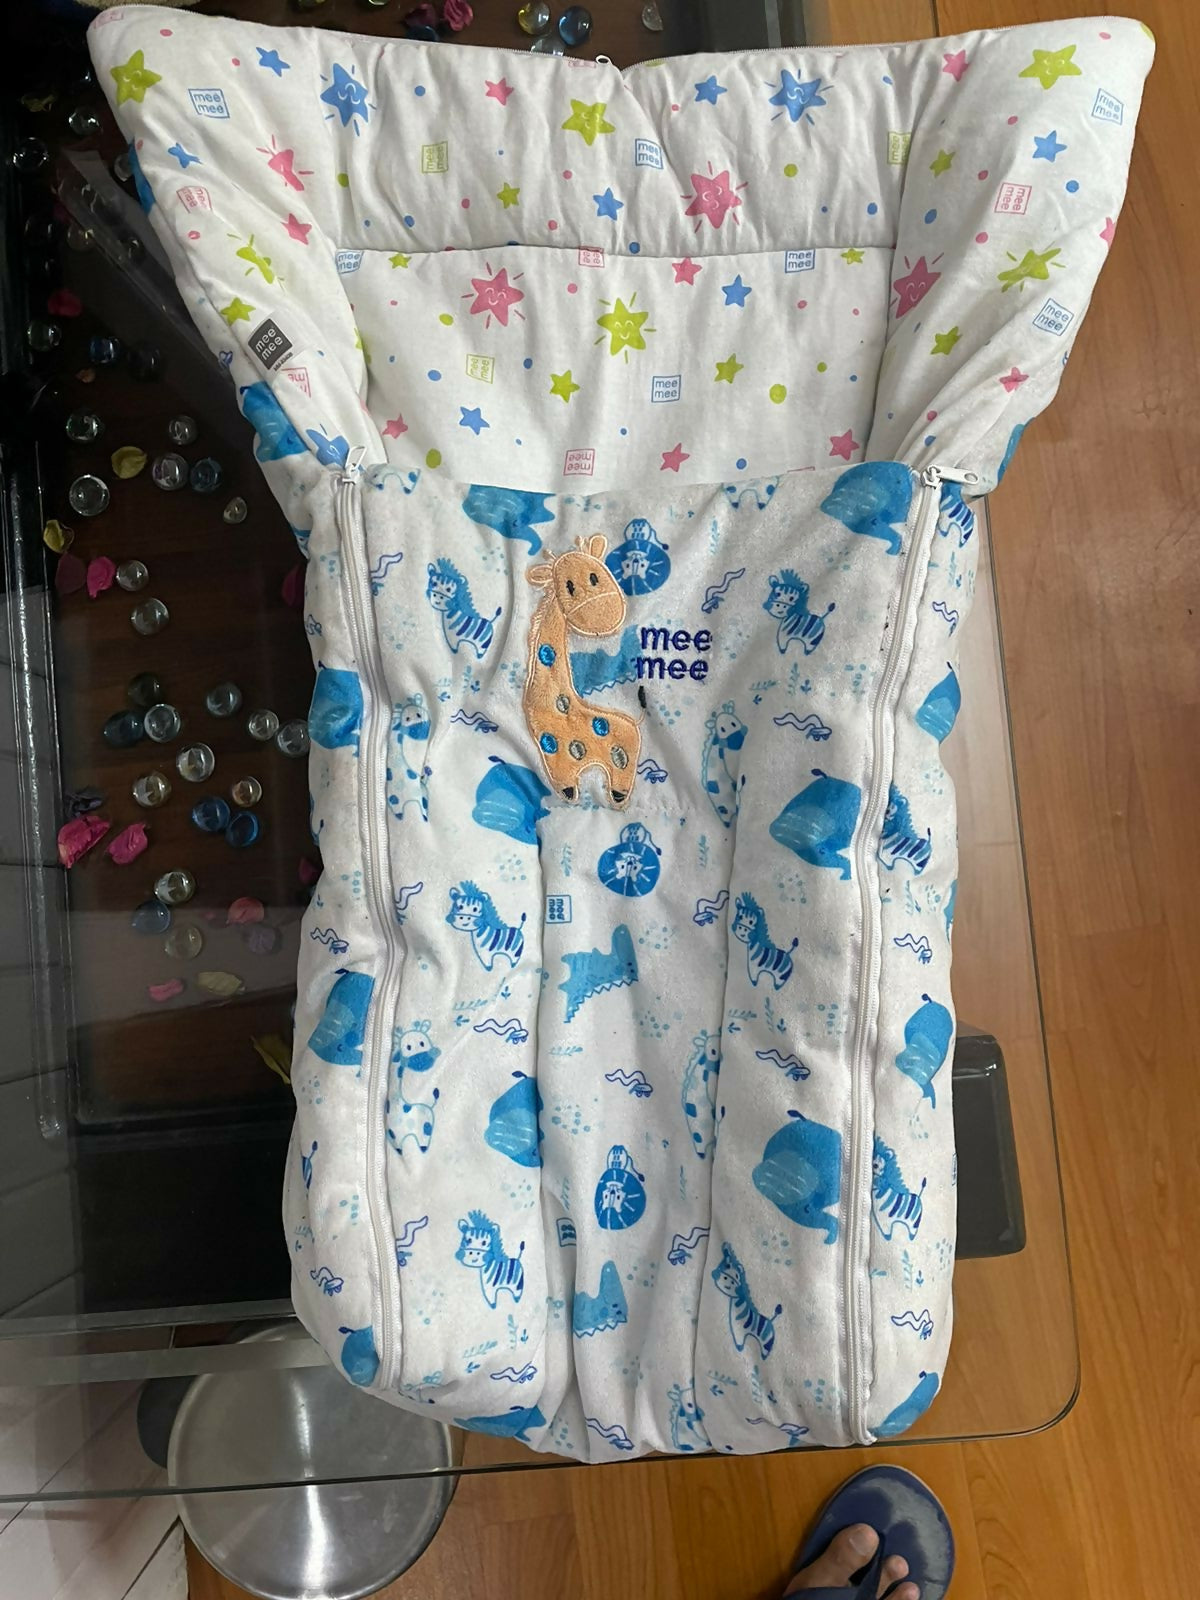 MEE MEE Baby Cozy/Warm Carry Nest Sleeping Bag & Mattress for Newborn Babies (Blue) - PyaraBaby